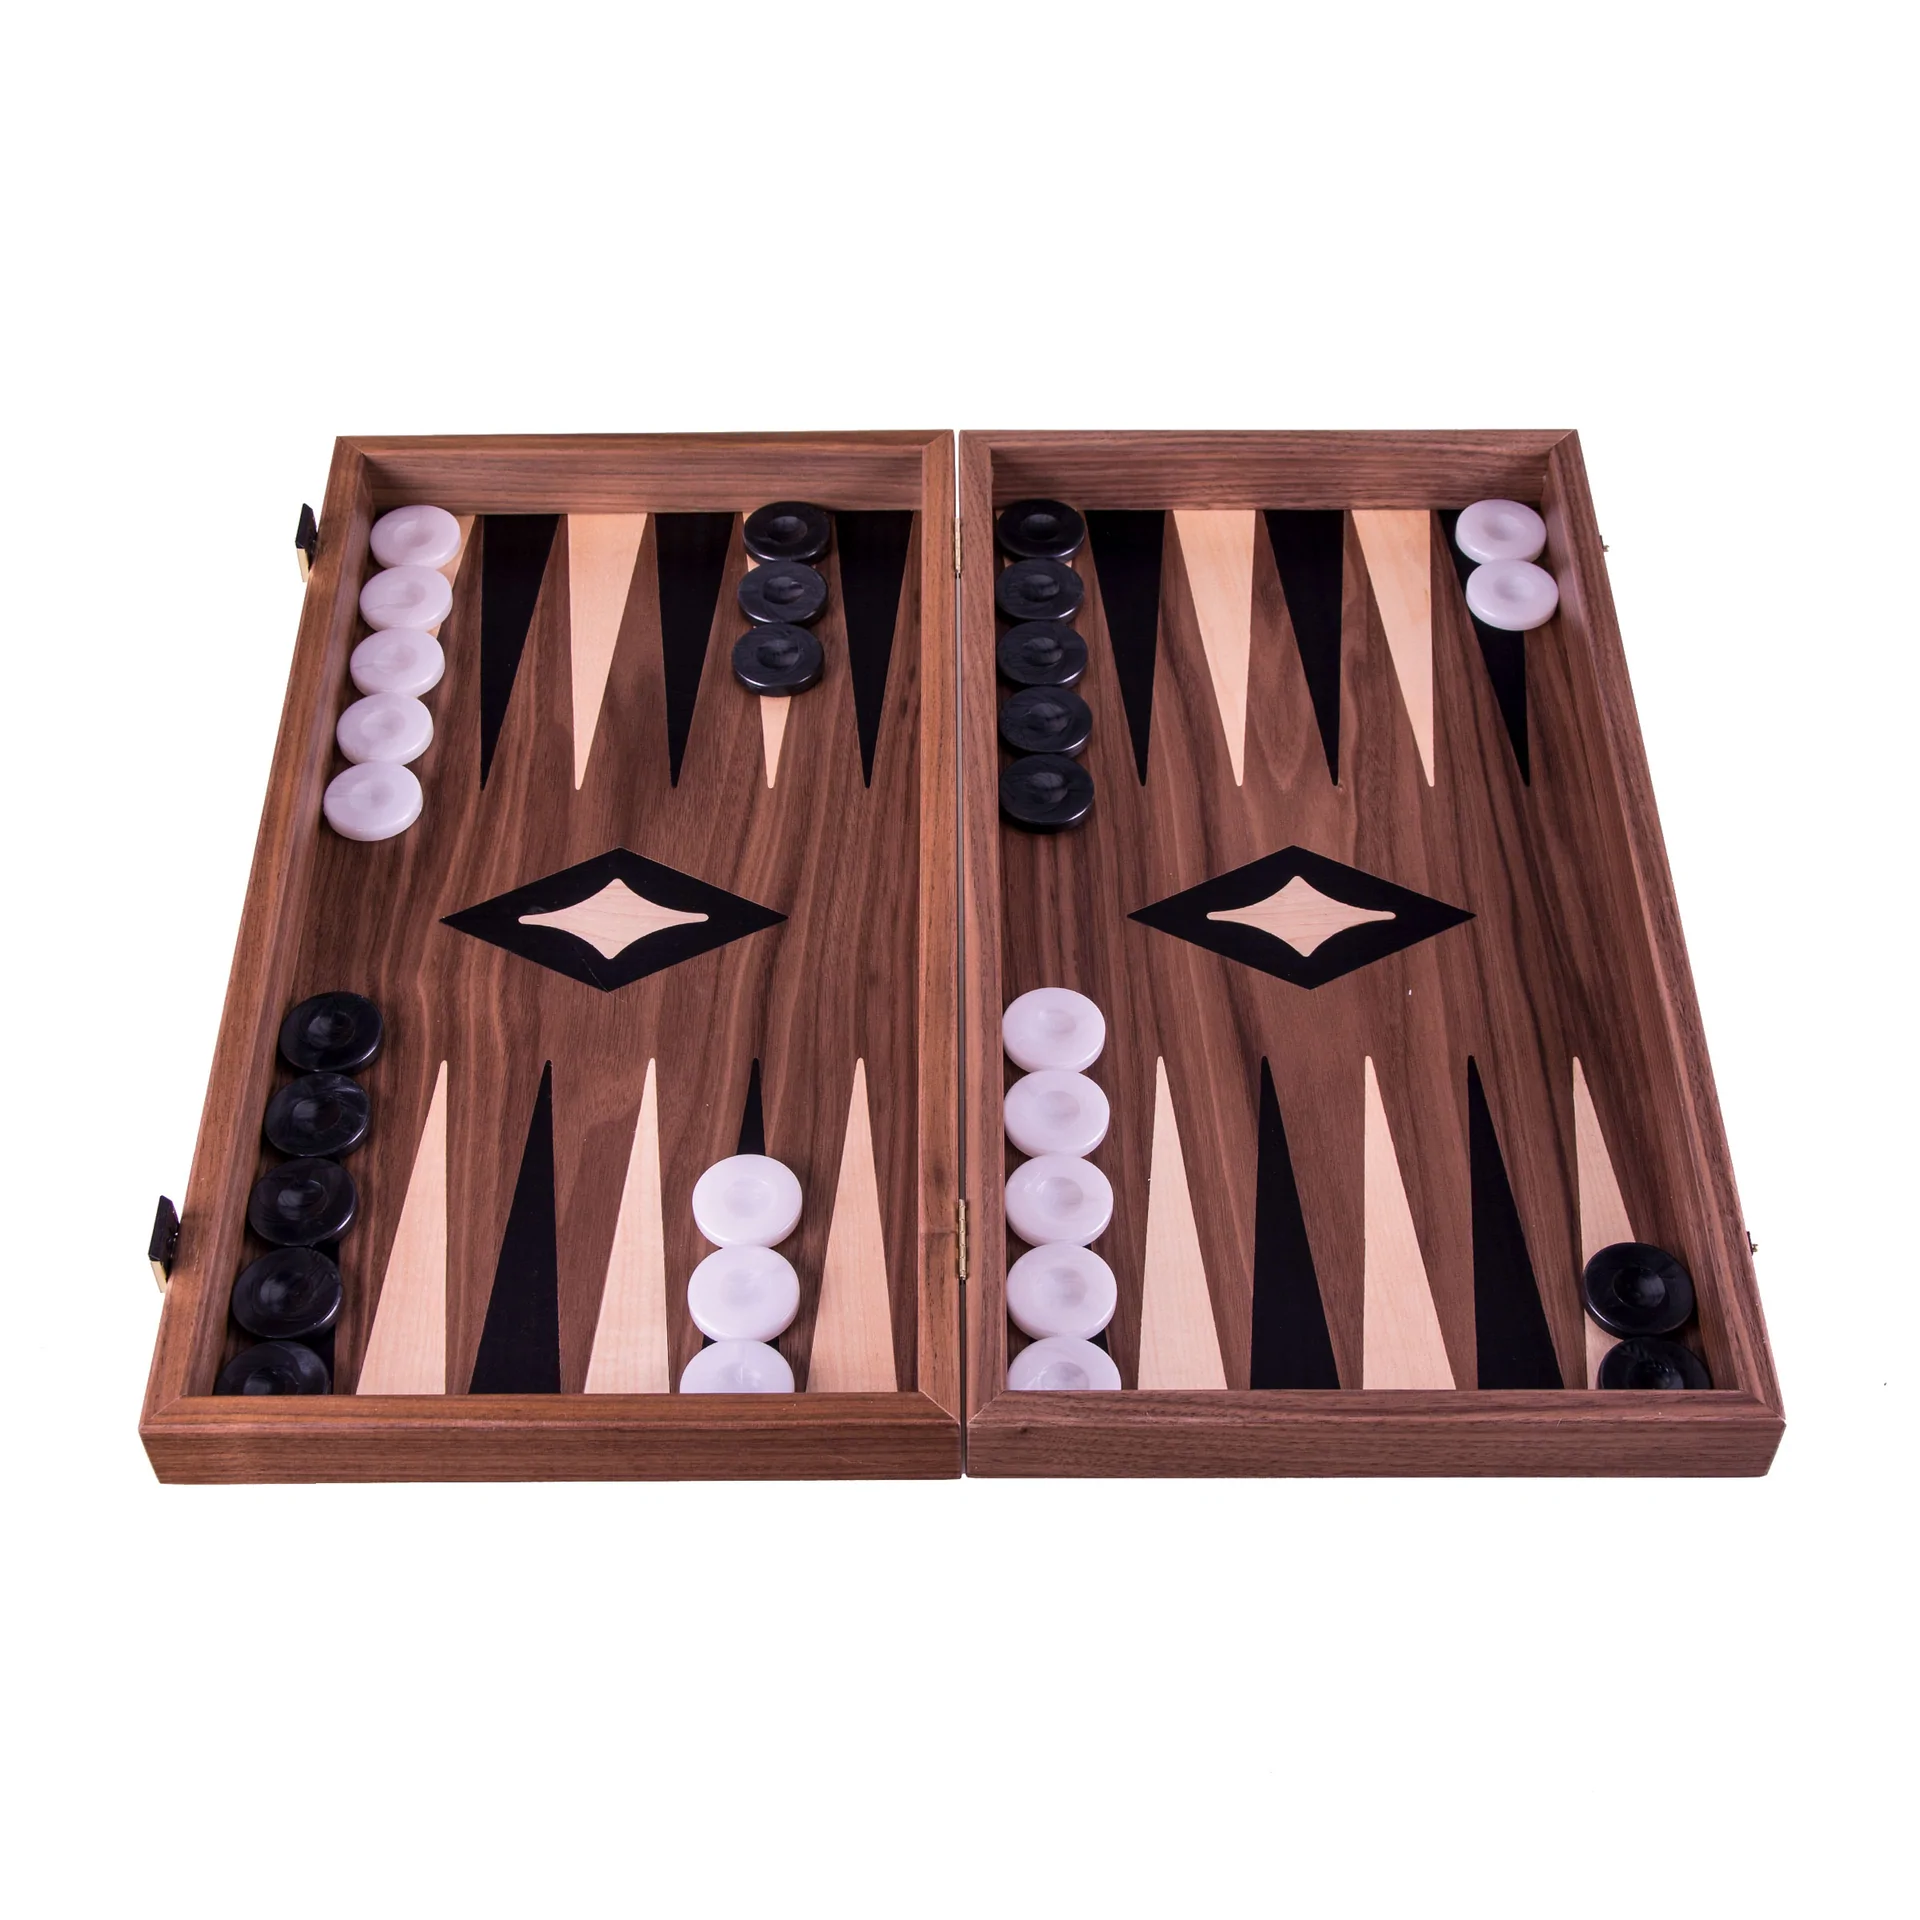 3 in 1 Schaak/Backgammon/Dam bord Small